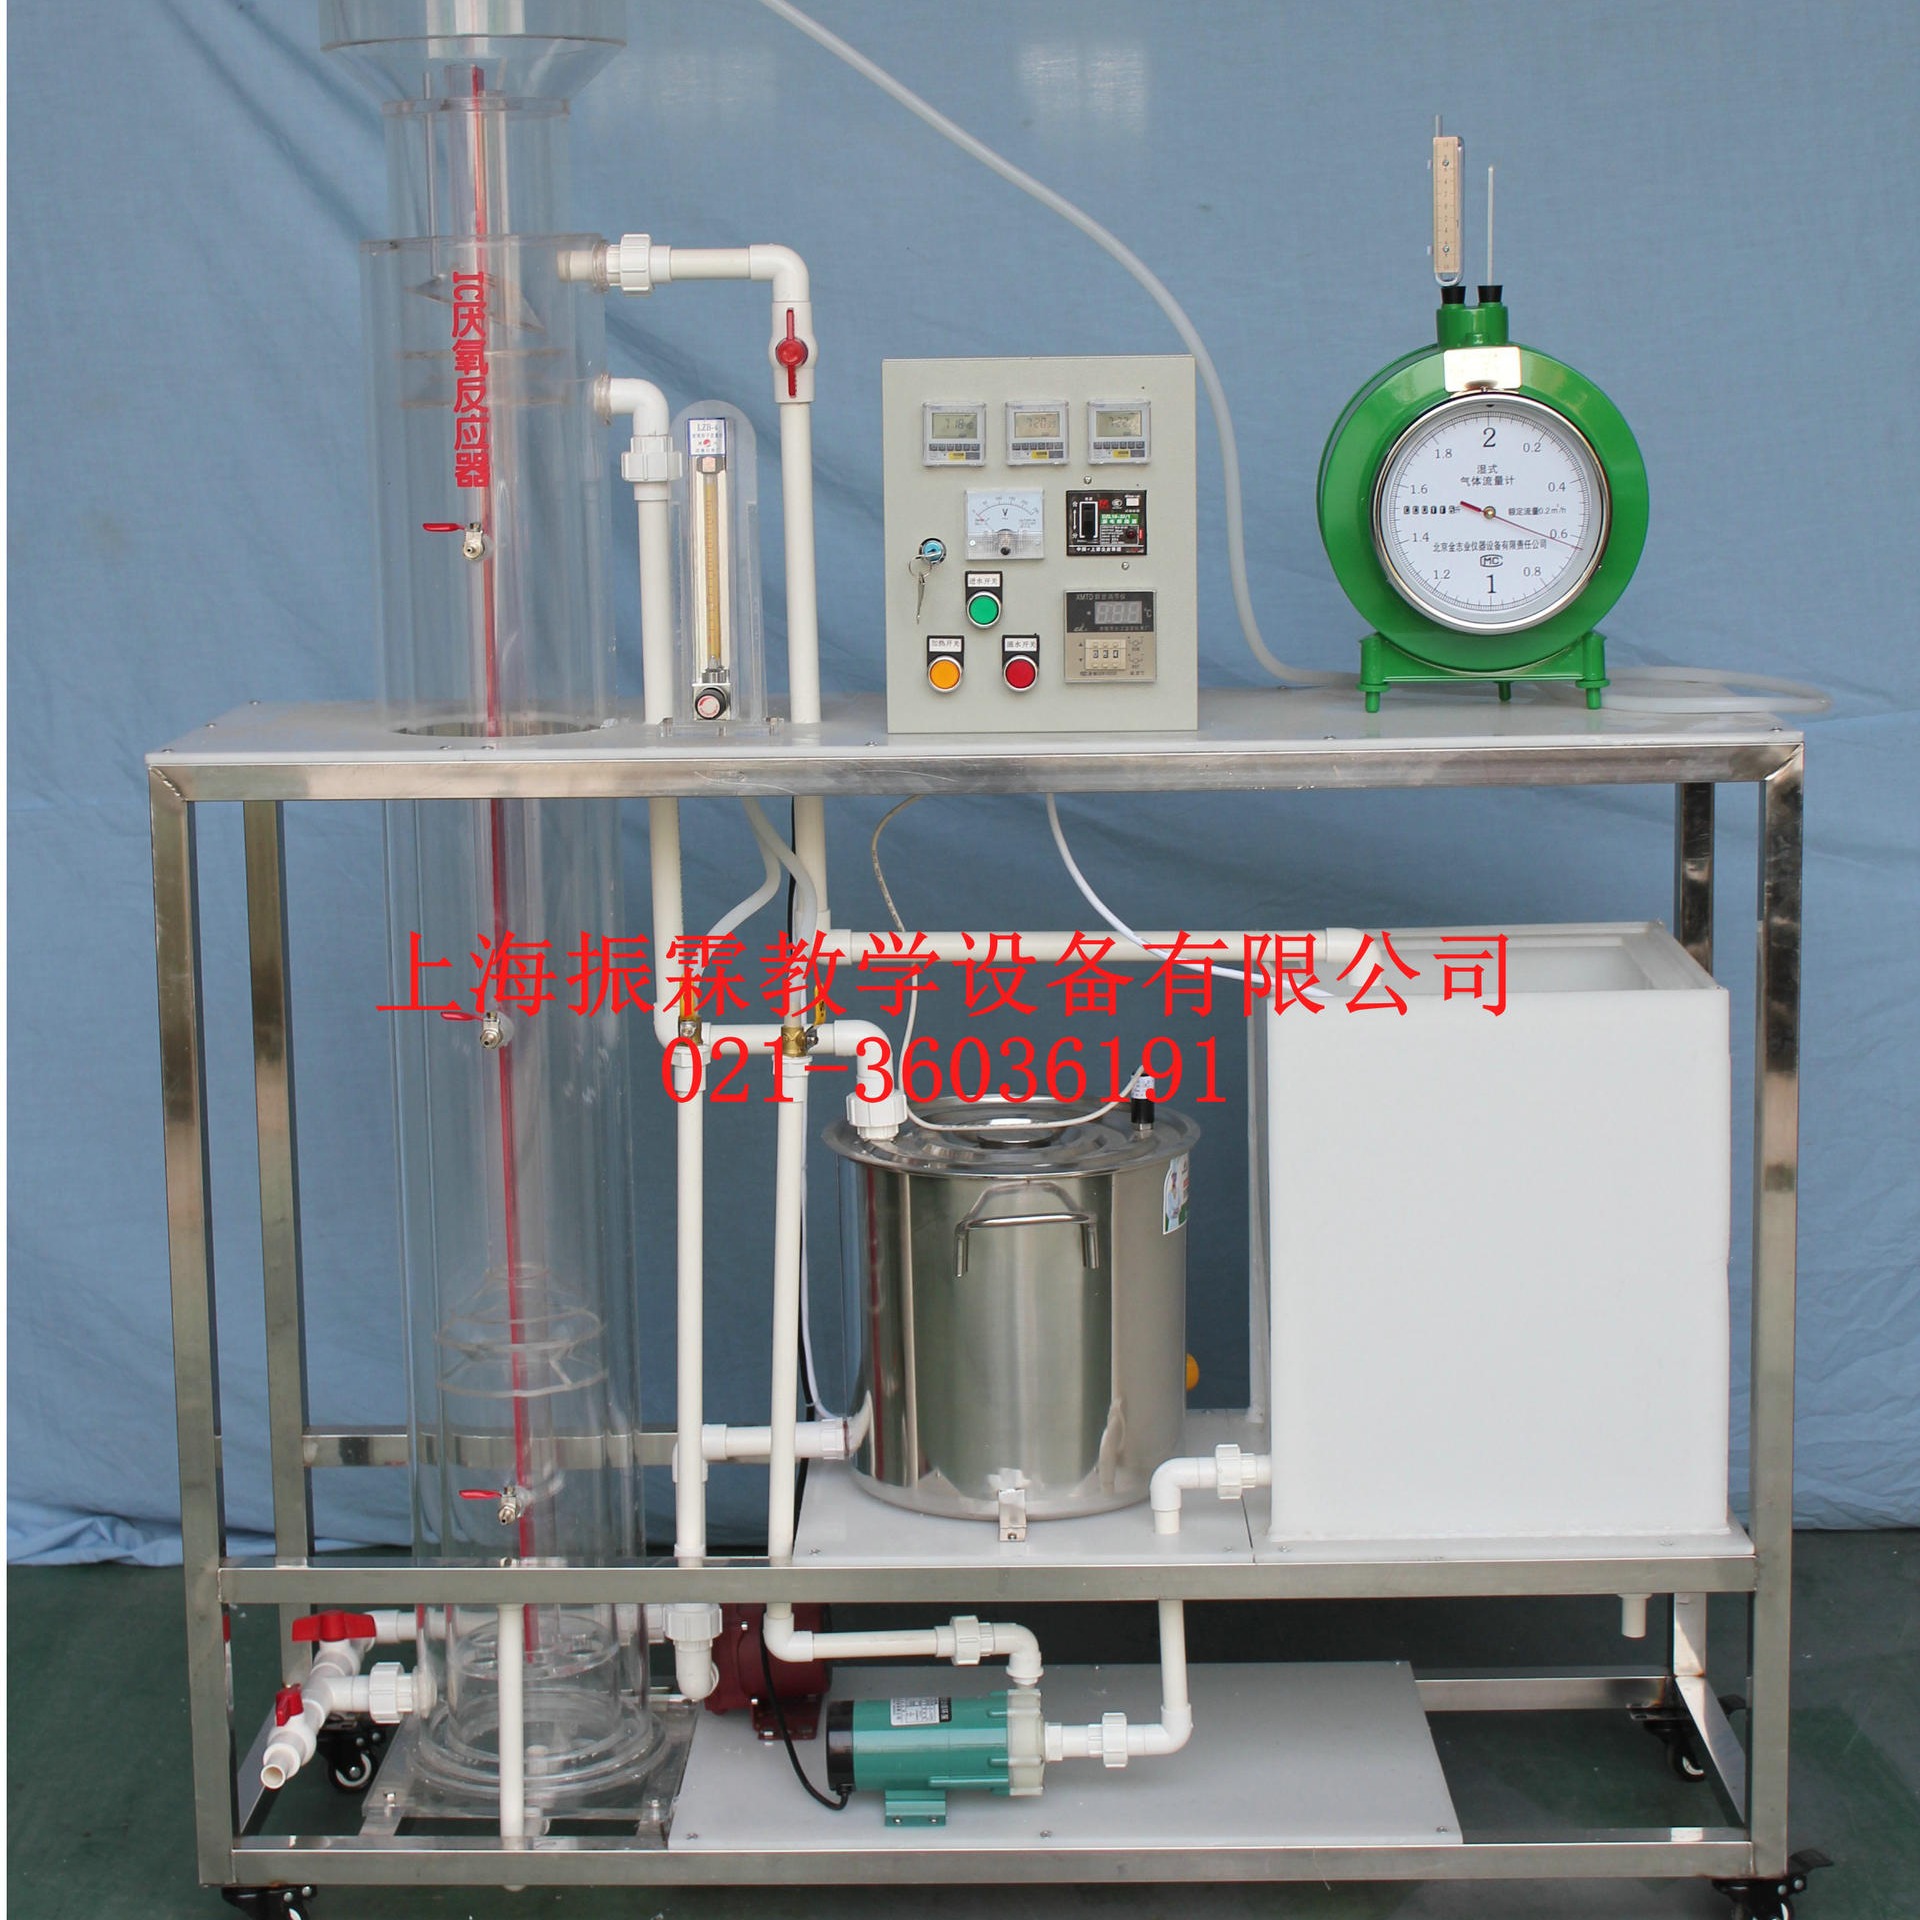 ZLHJ-V169型IC厌氧反应器装置 IC厌氧反应器实验设备 IC厌氧反应器实训台 环境工程实验装置 振霖厂家直销